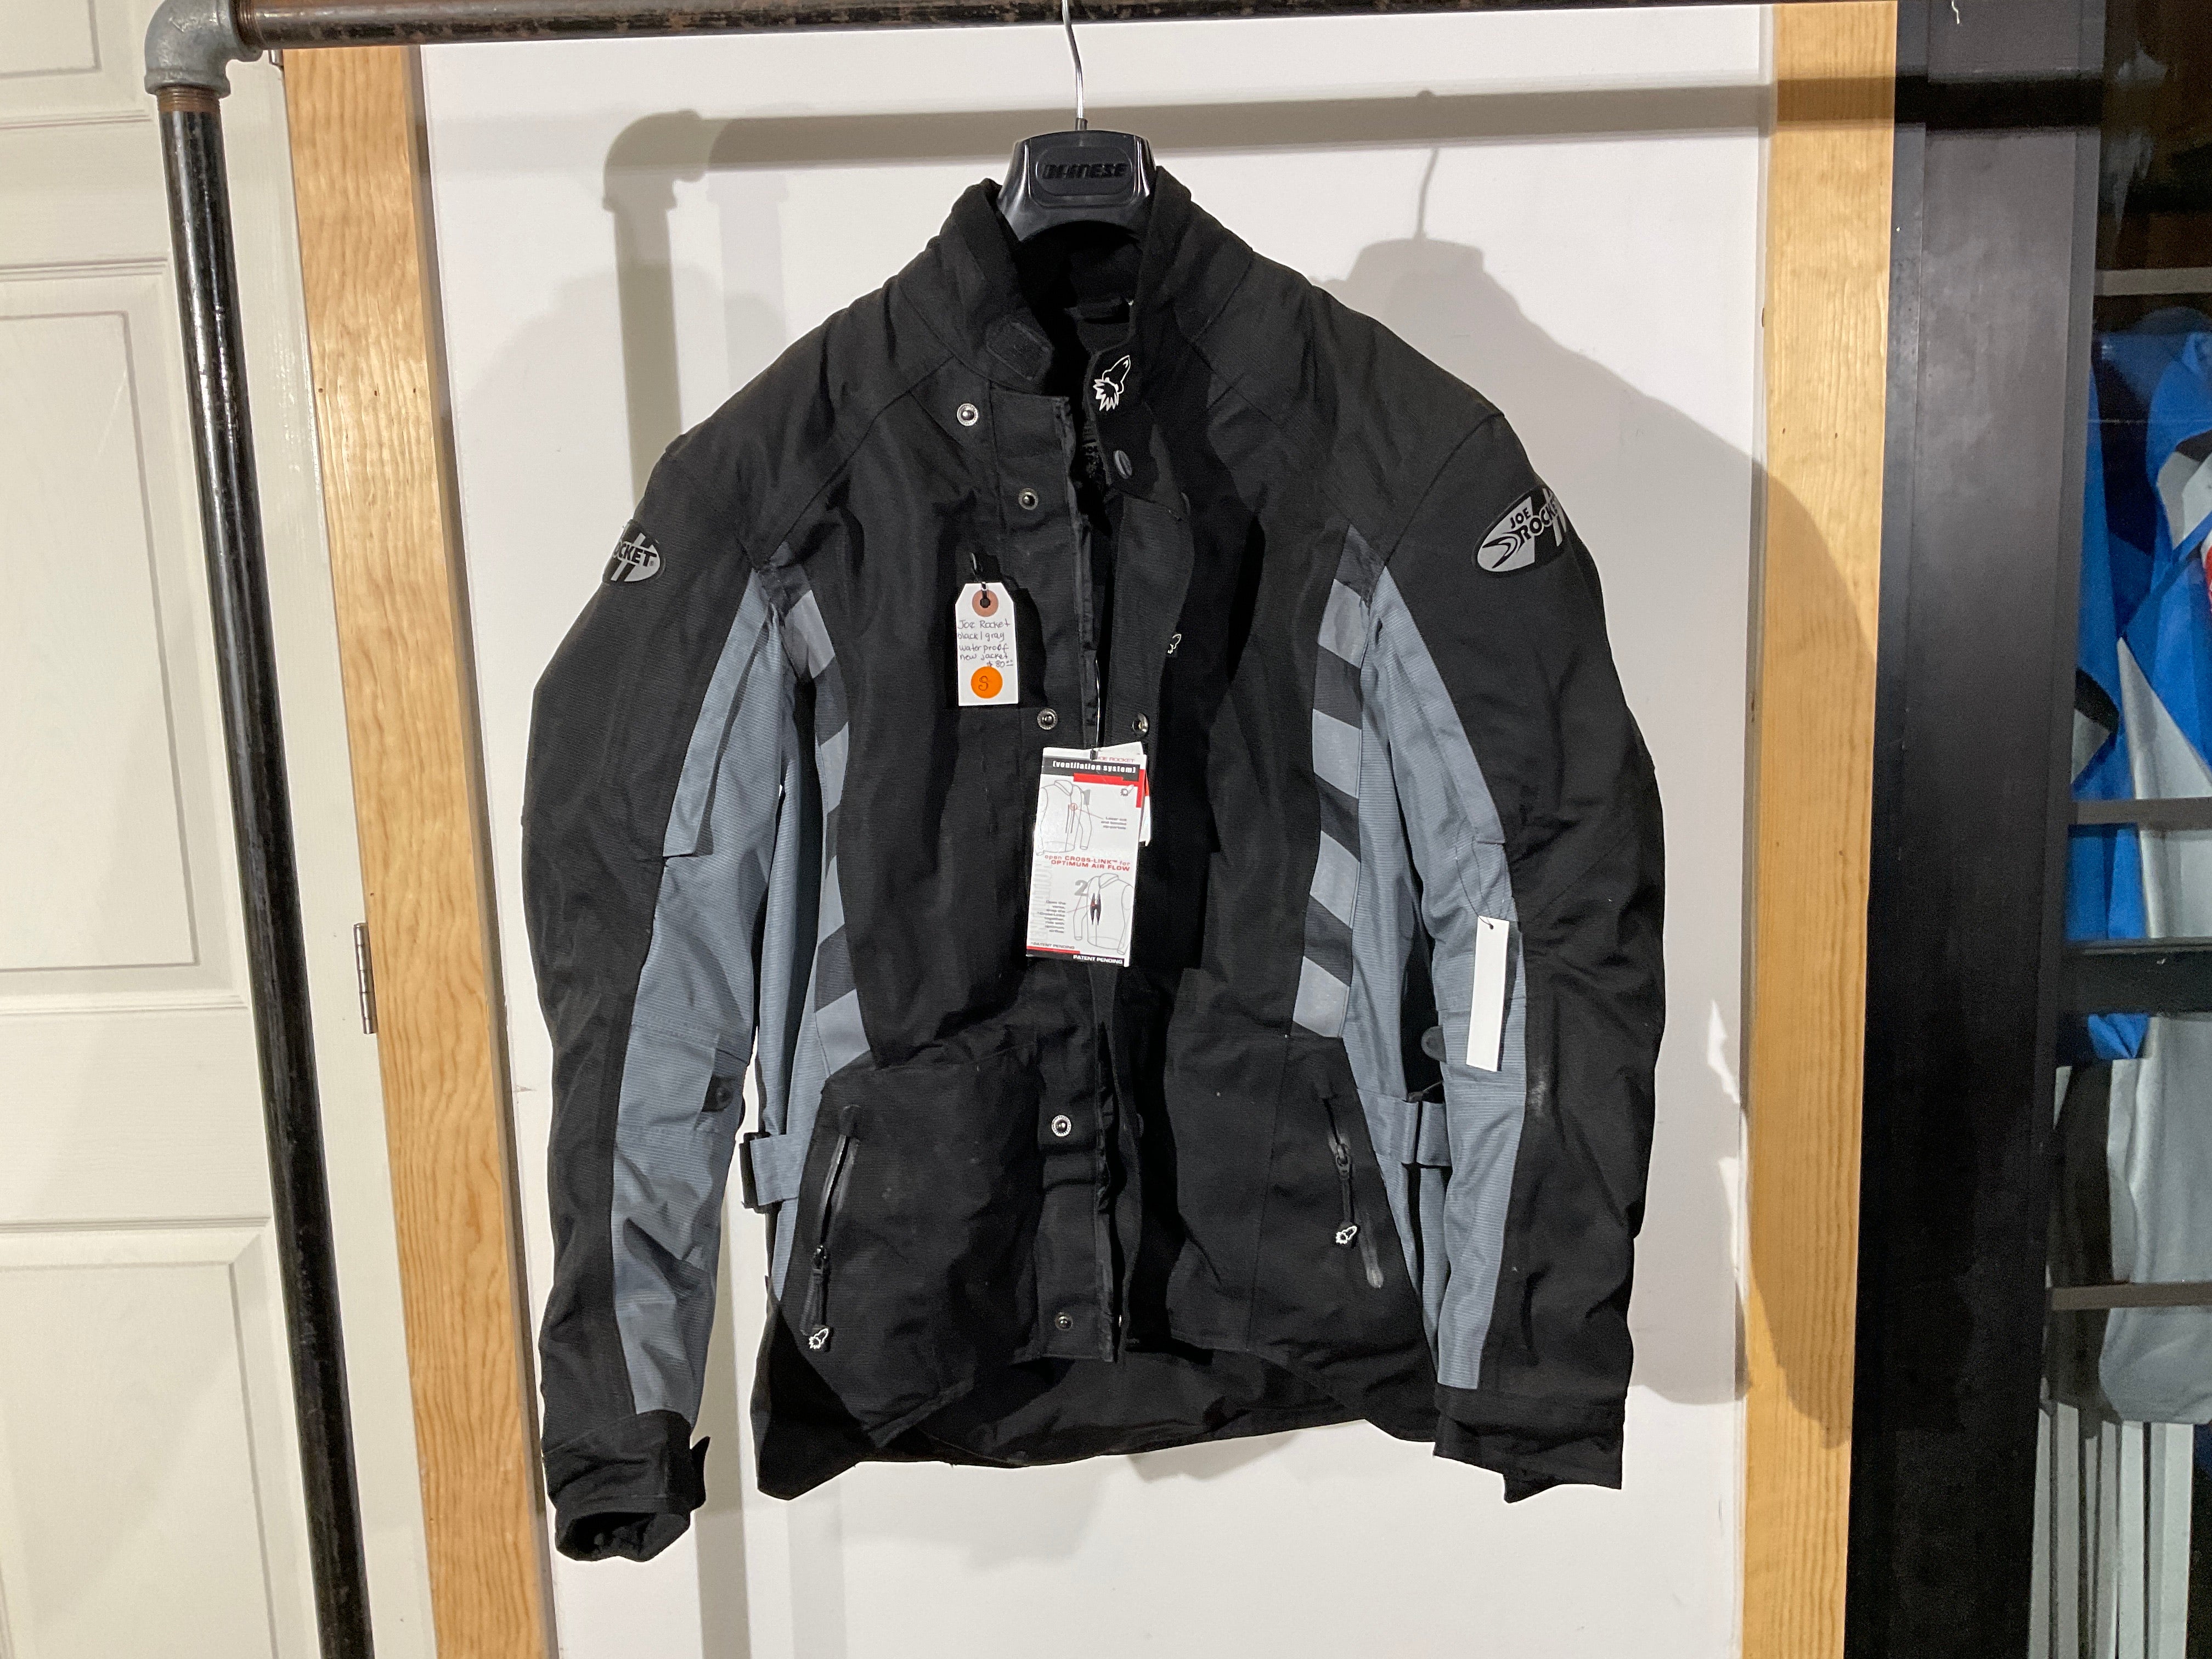 Joe Rocket Black and Grey Waterproof Jacket w/ liner - Moto Guild